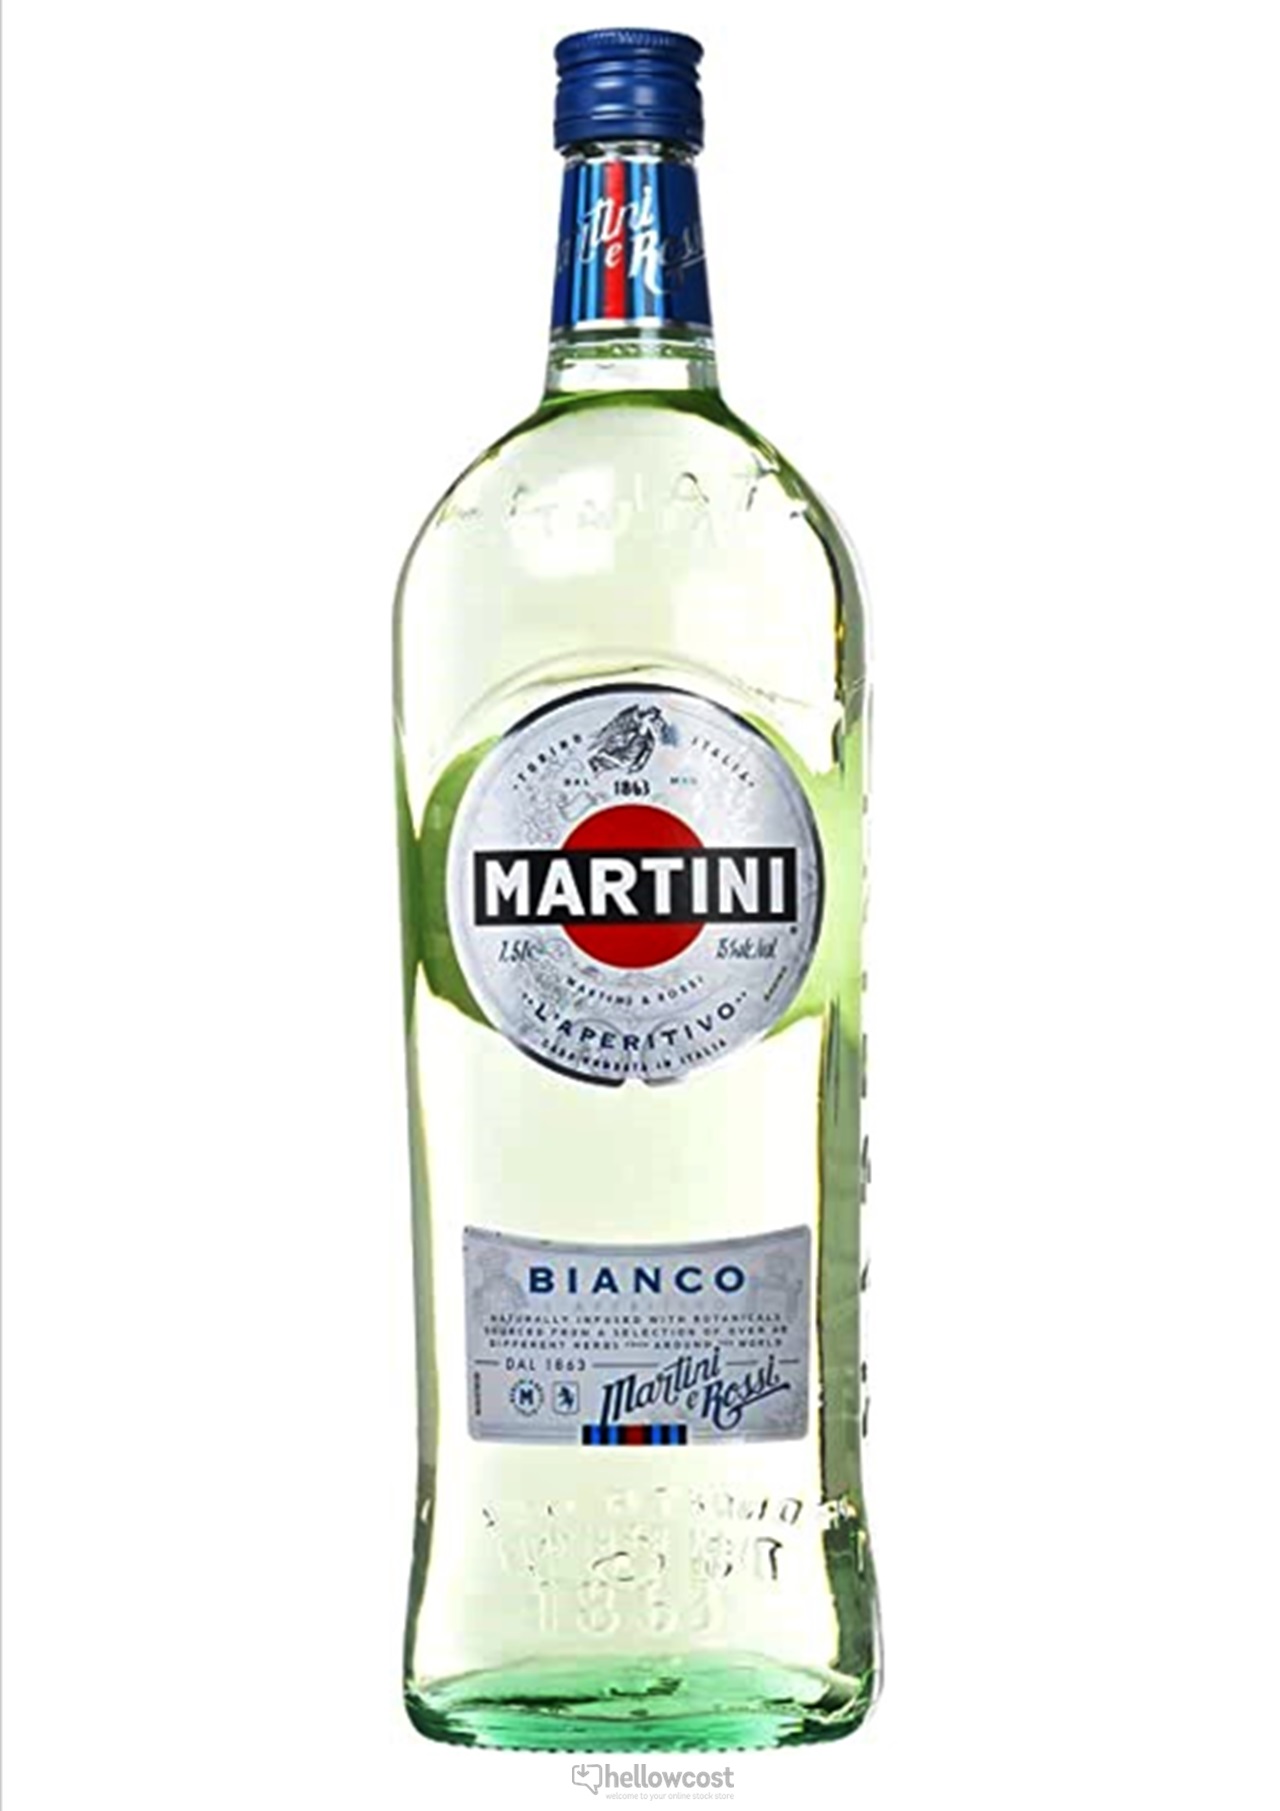 Martini Bianco Magnum Vermout Aperitif 15% 150 cl - Hellowcost